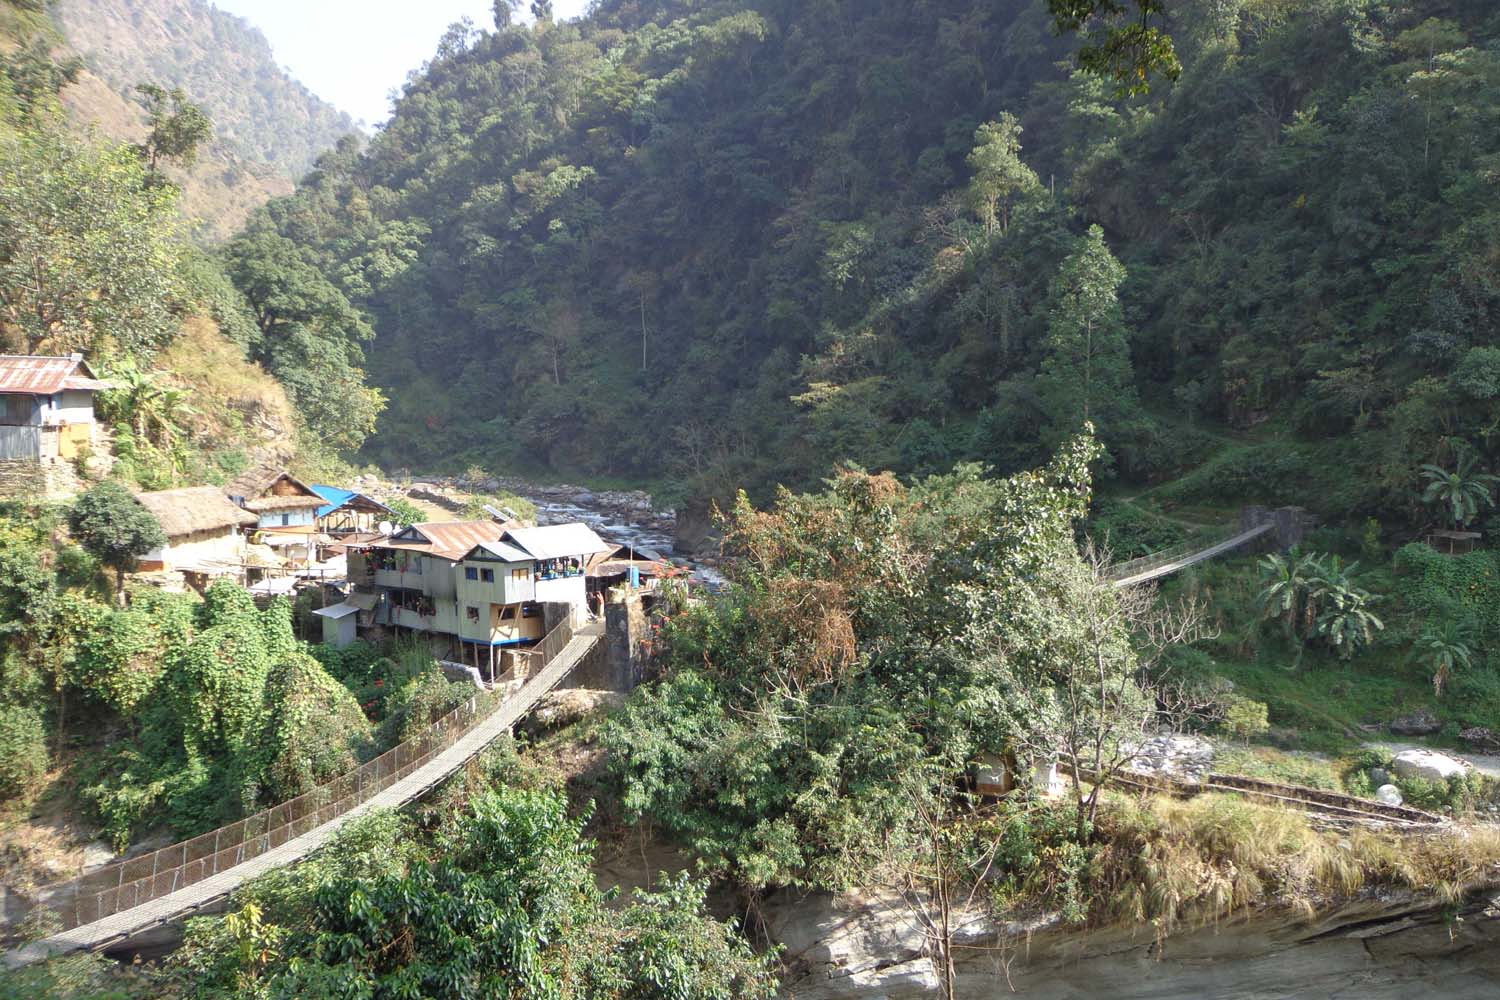  Trekking In Nepal Expectations vs Reality